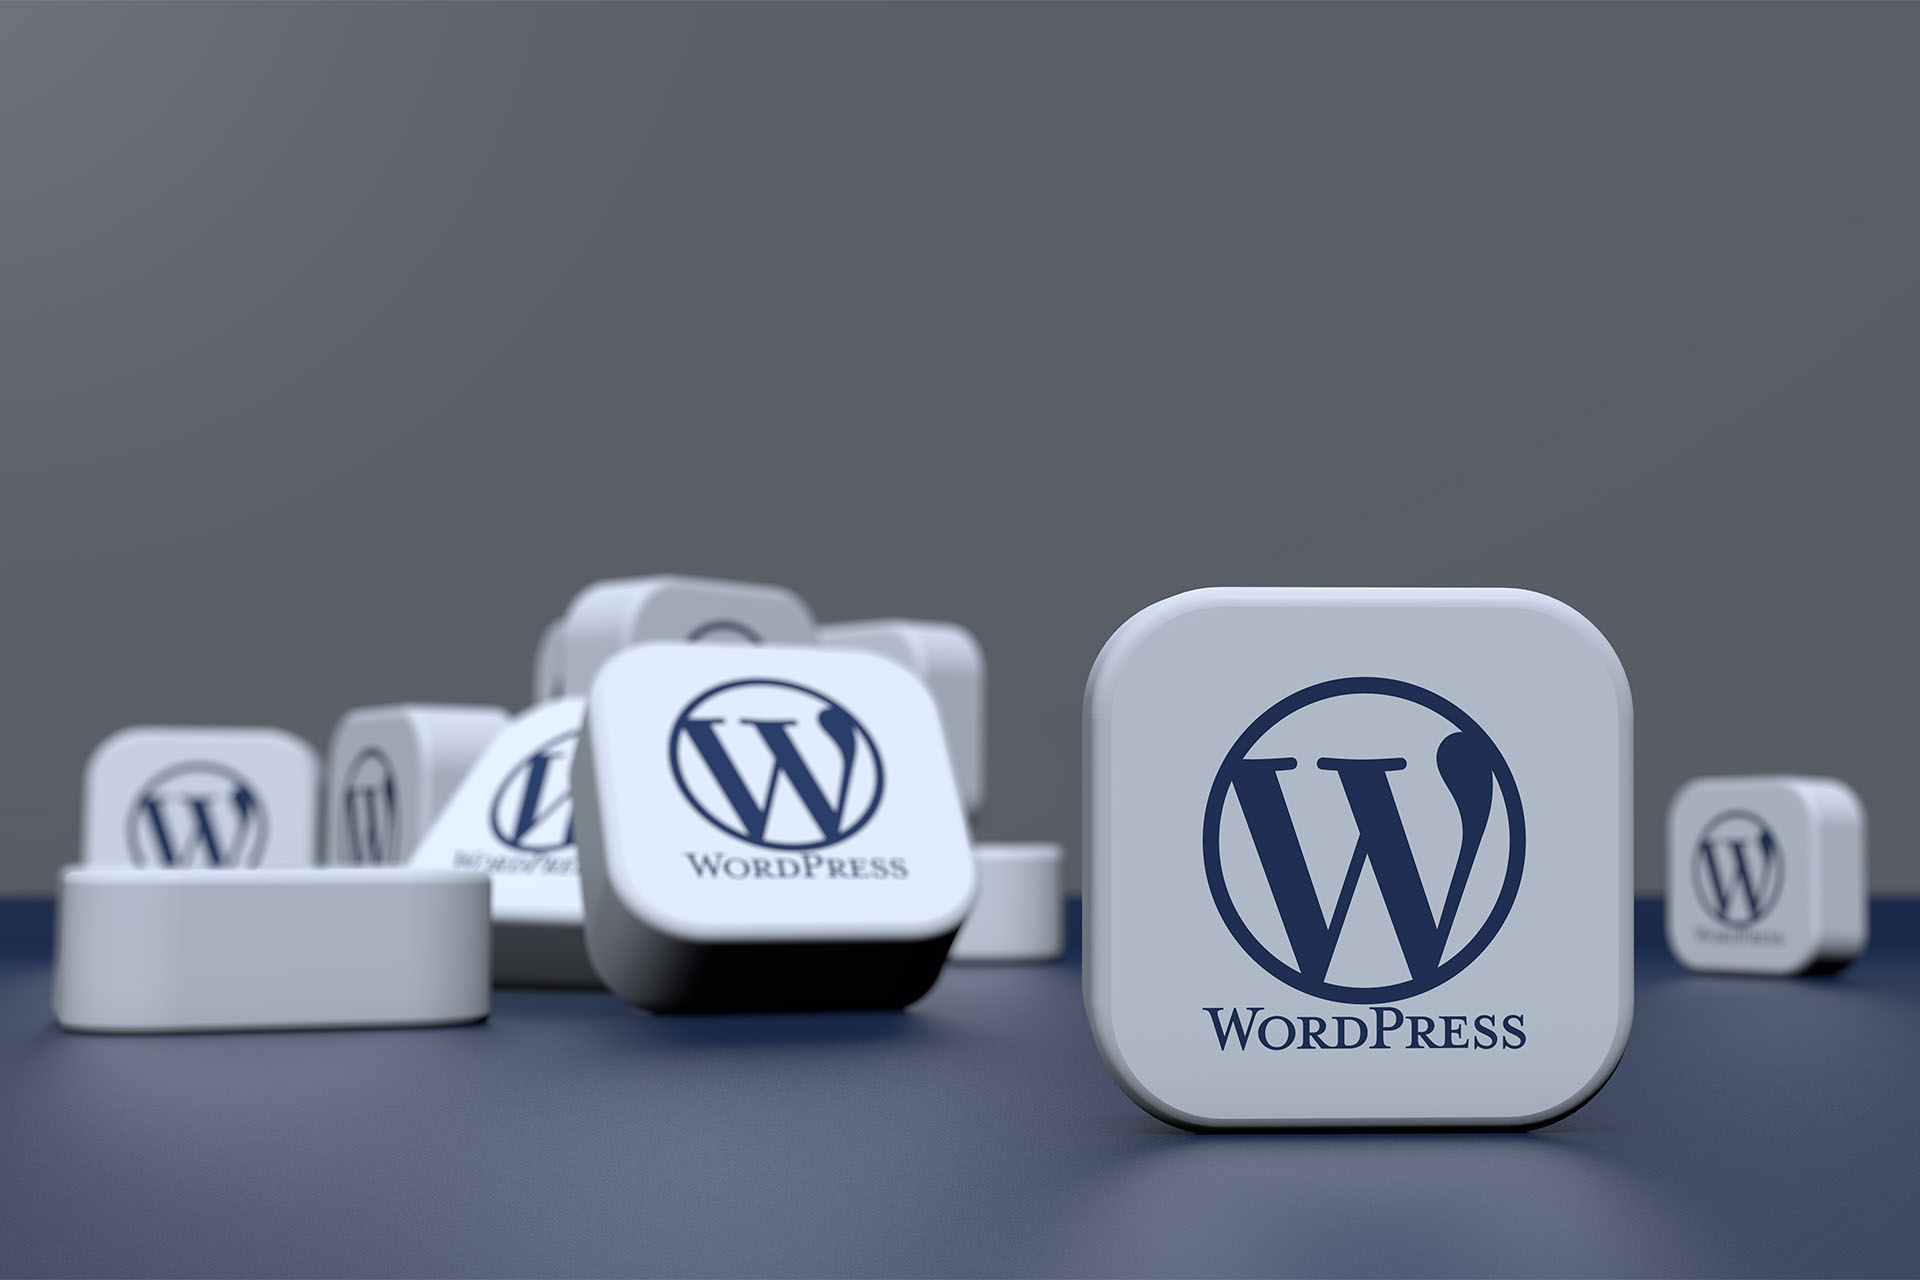 WordPress, WordPress, WordPress! Why is WordPress So Popular?